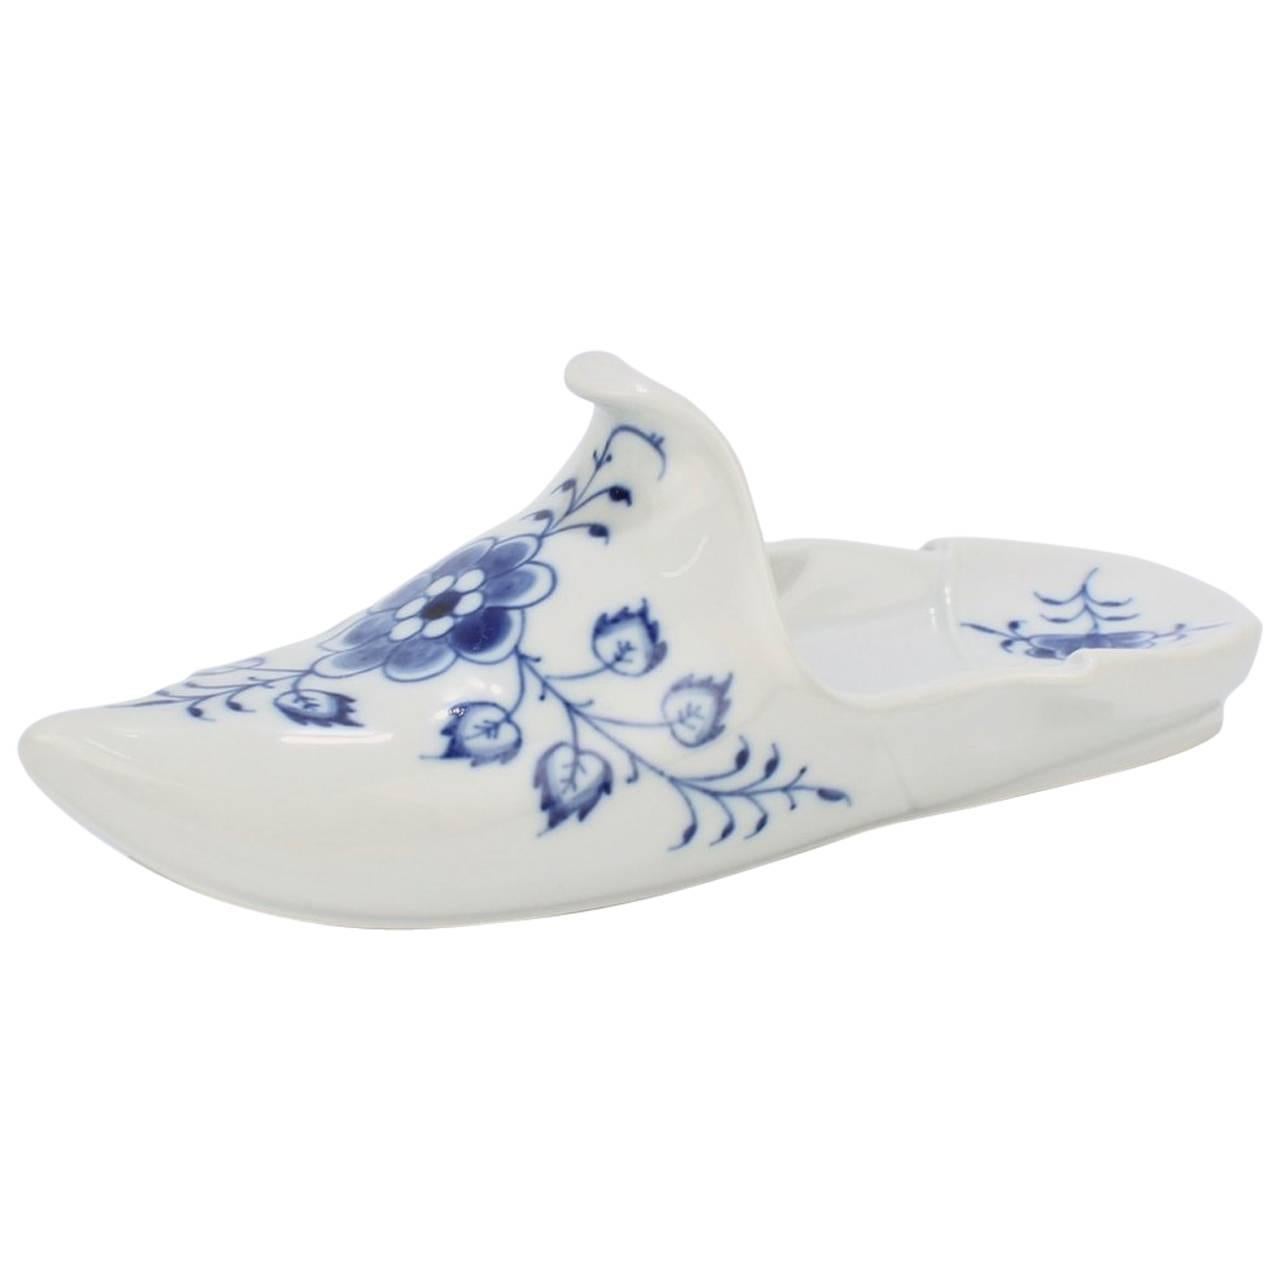 Vintage Meissen Porcelain Blue Onion Pattern Shoe or Slipper Paperweight For Sale